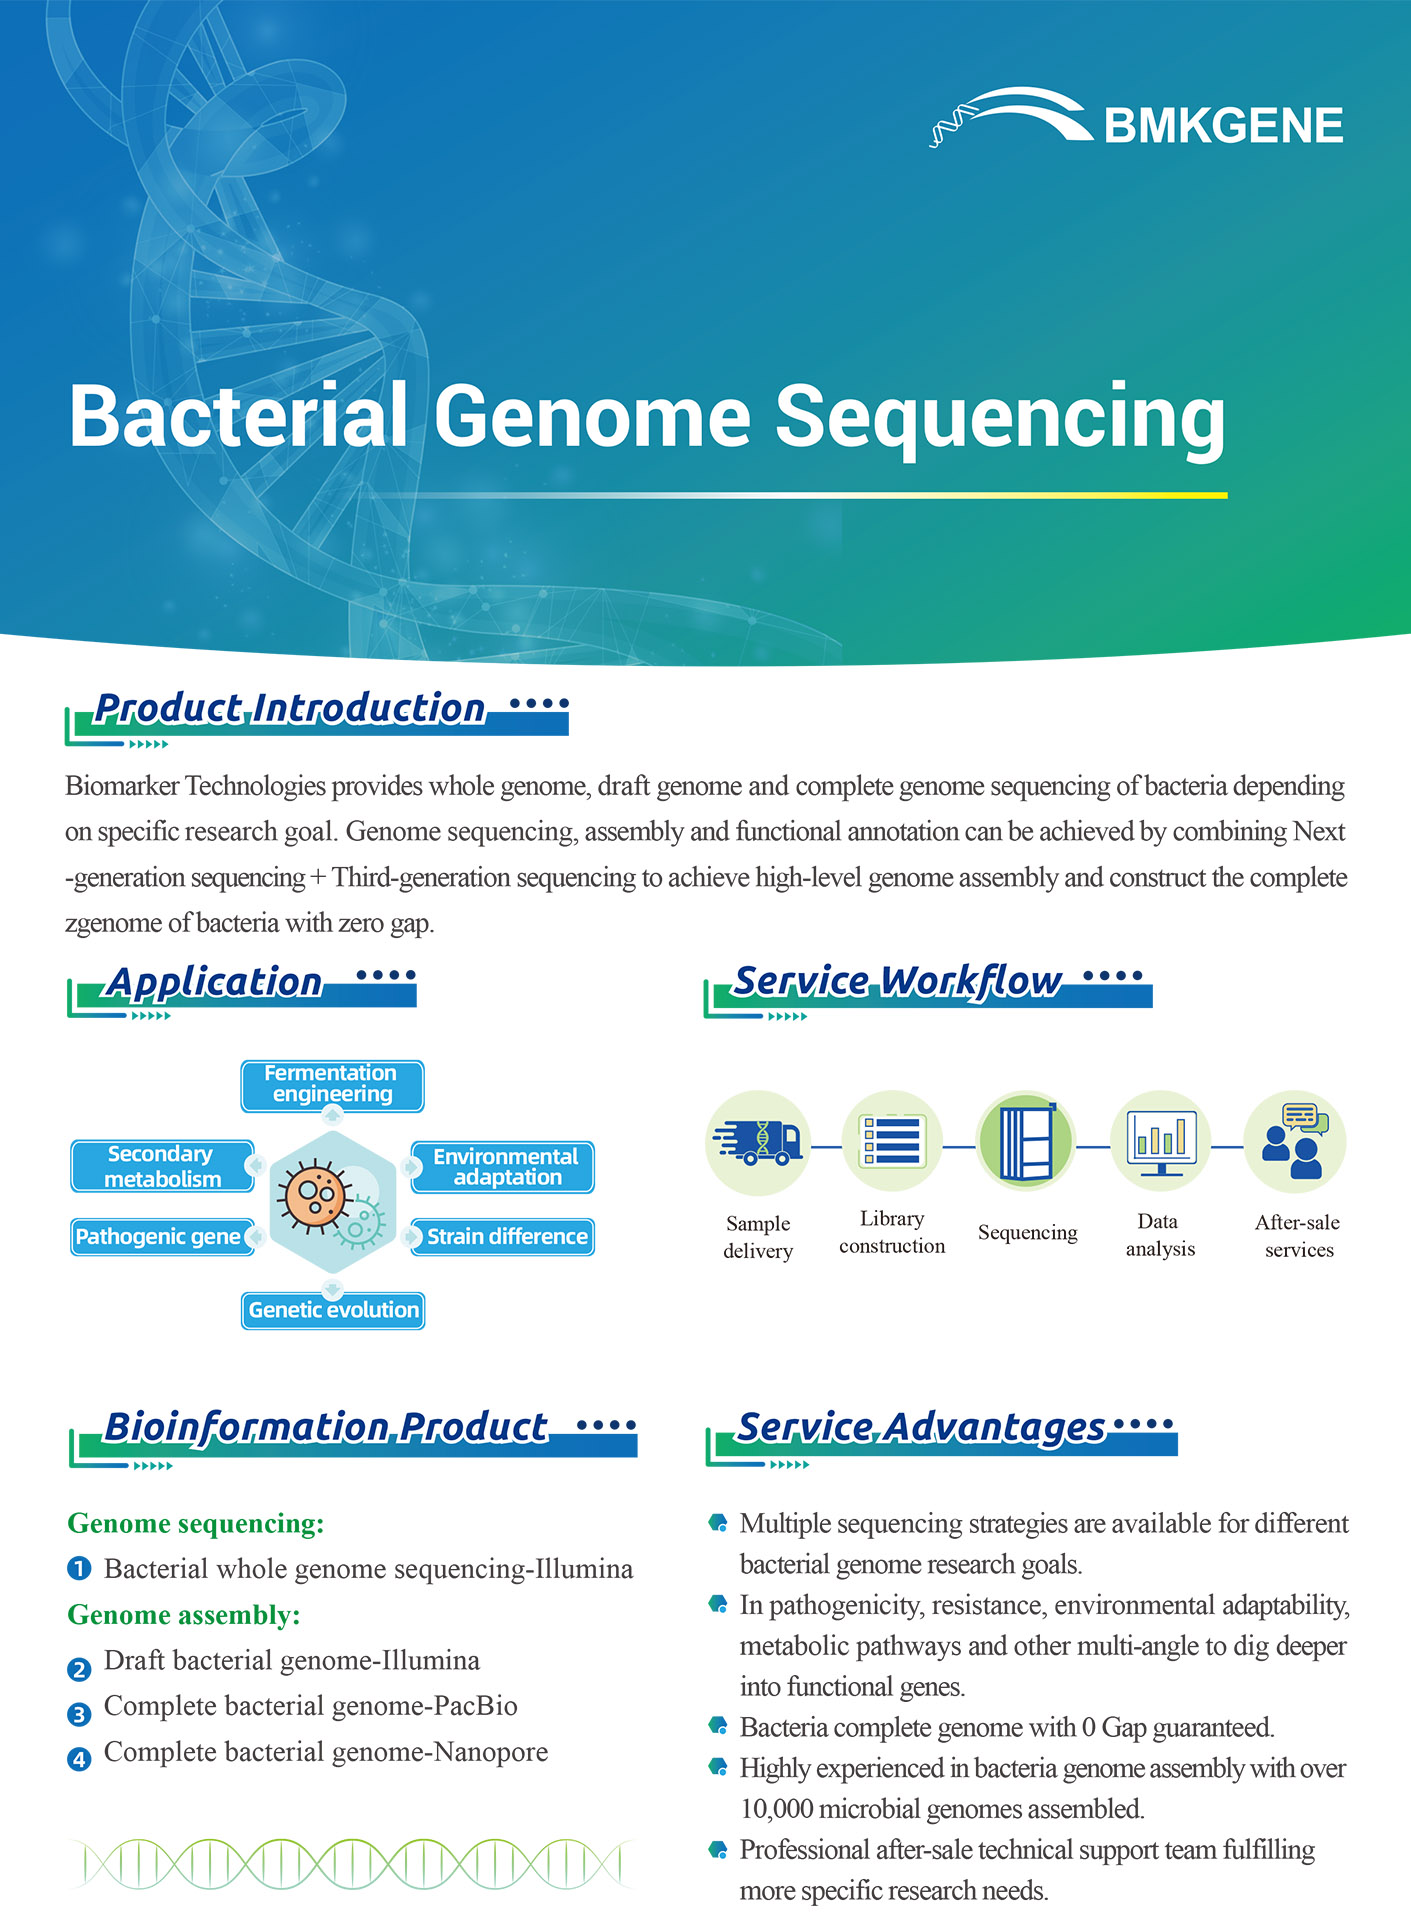 https://www.bmkgene.com/uploads/Bacterial-Genome-Sequencing-BMKGENE-2023.123.pdf